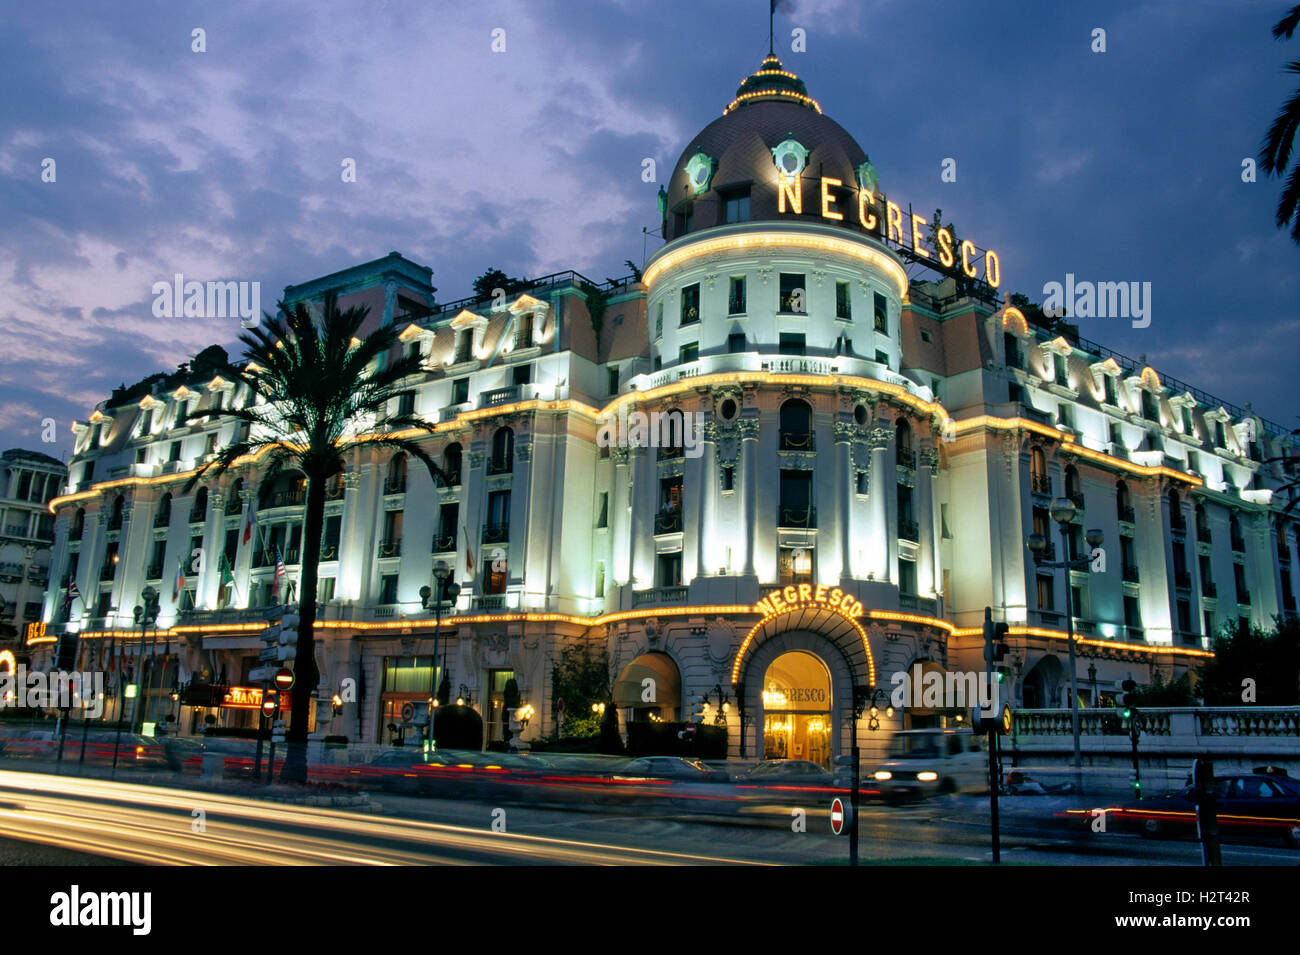 Hotel Negresco, Nice, Alpes Maritimes, France, Europe Banque D'Images